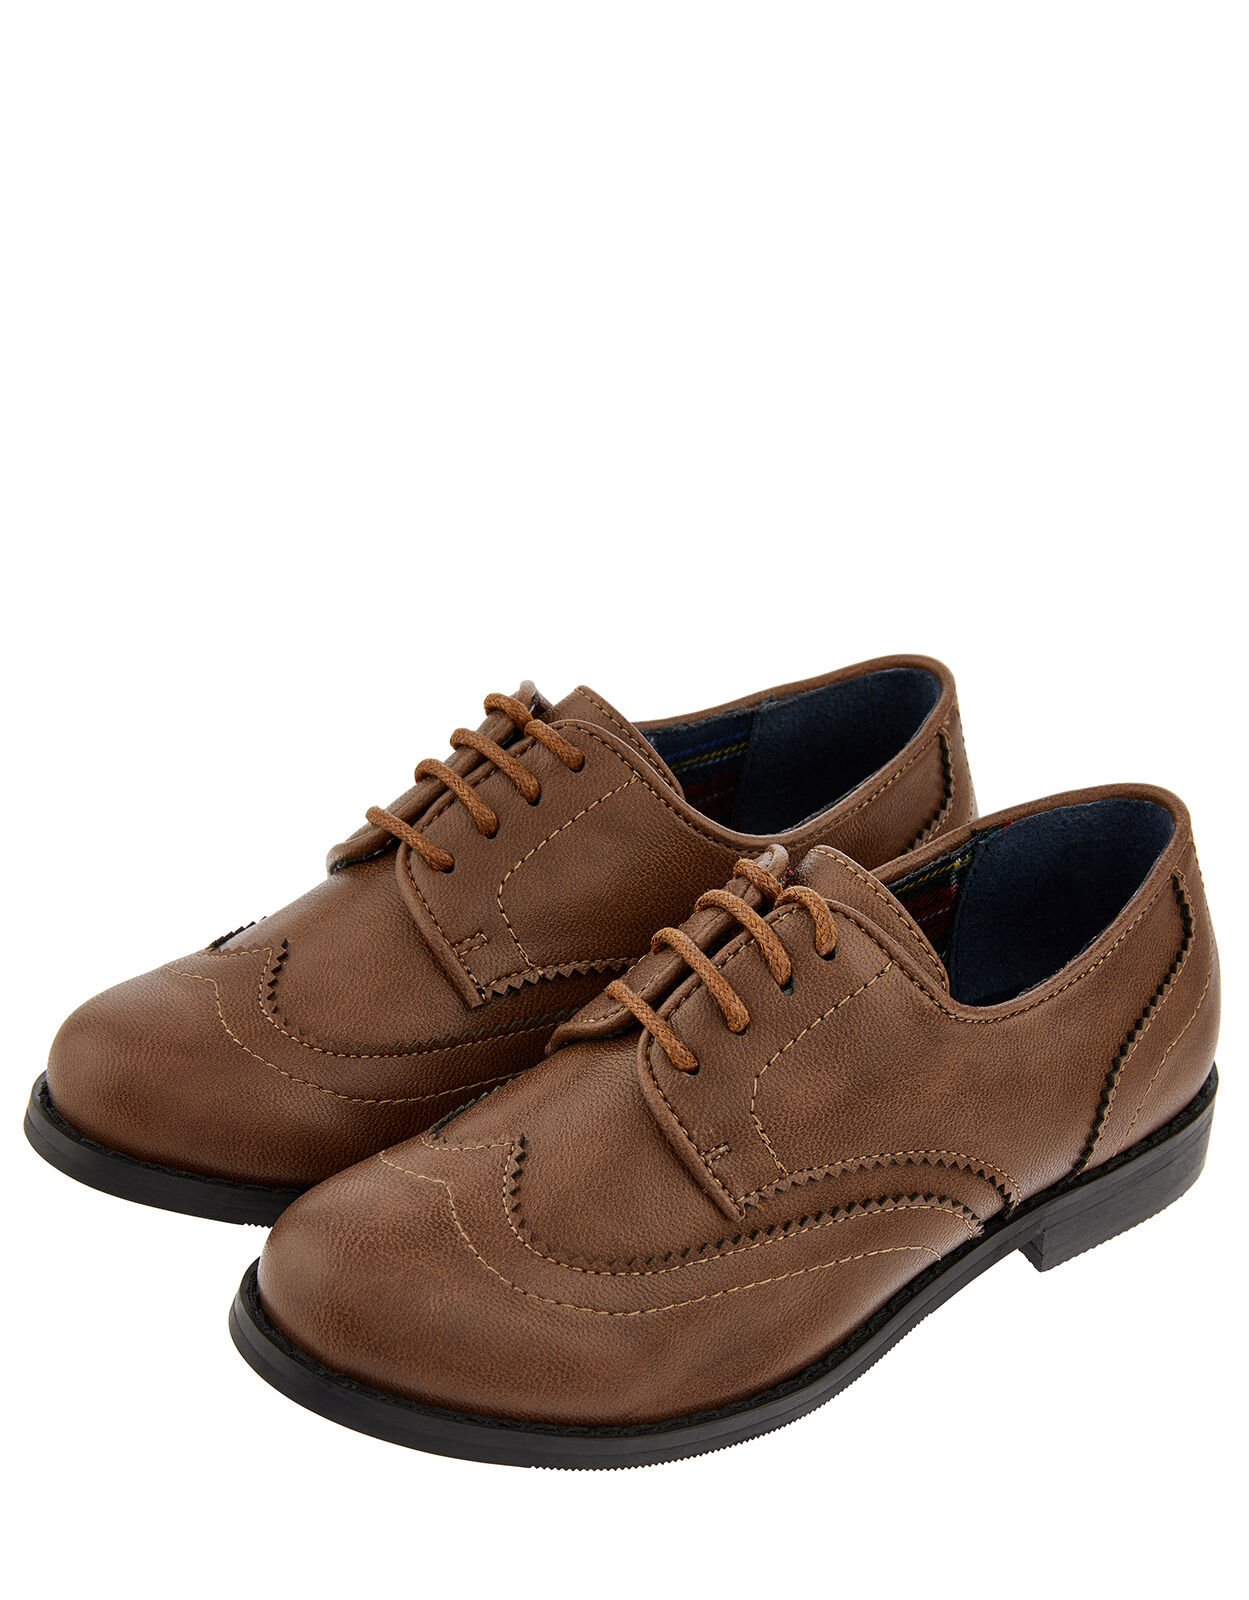 Boys' Oxford Brogue Shoes Brown | Boys 